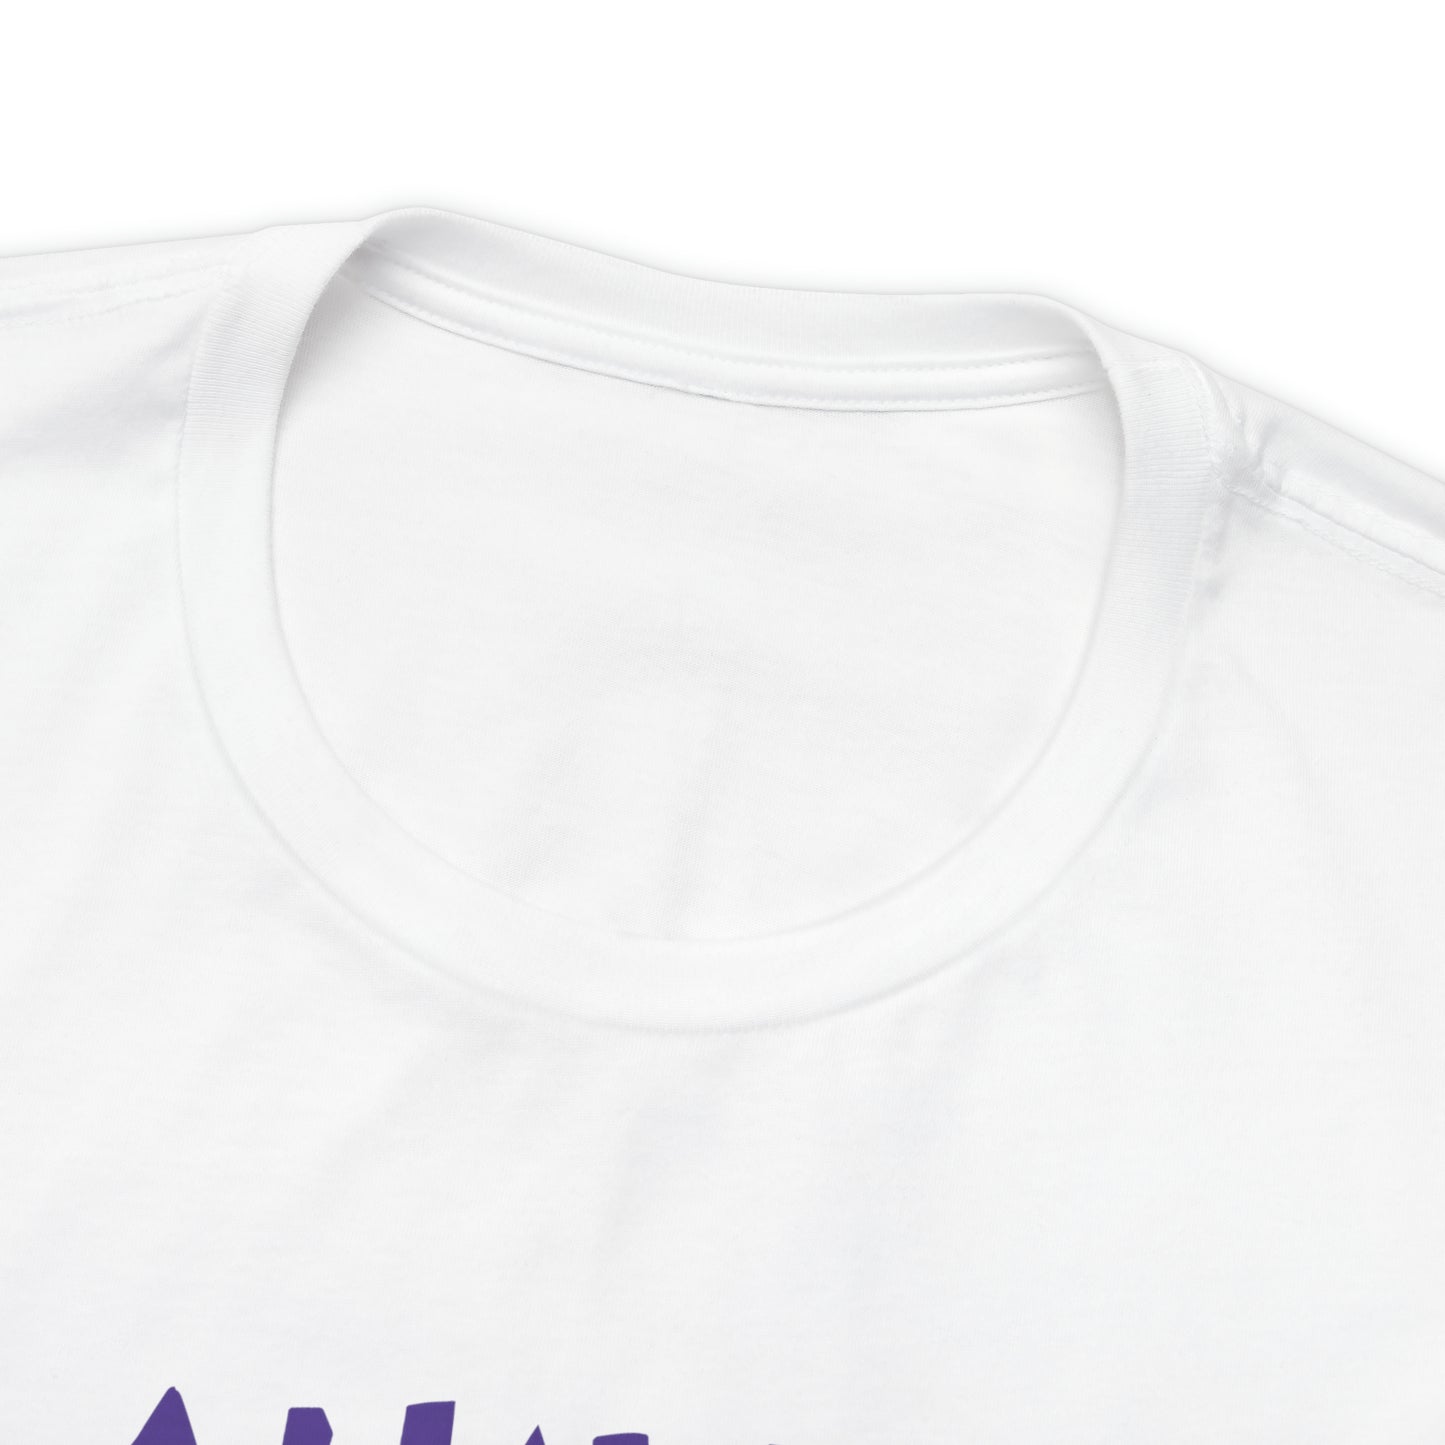 SHIVER Unisex White Vamp T-shirt